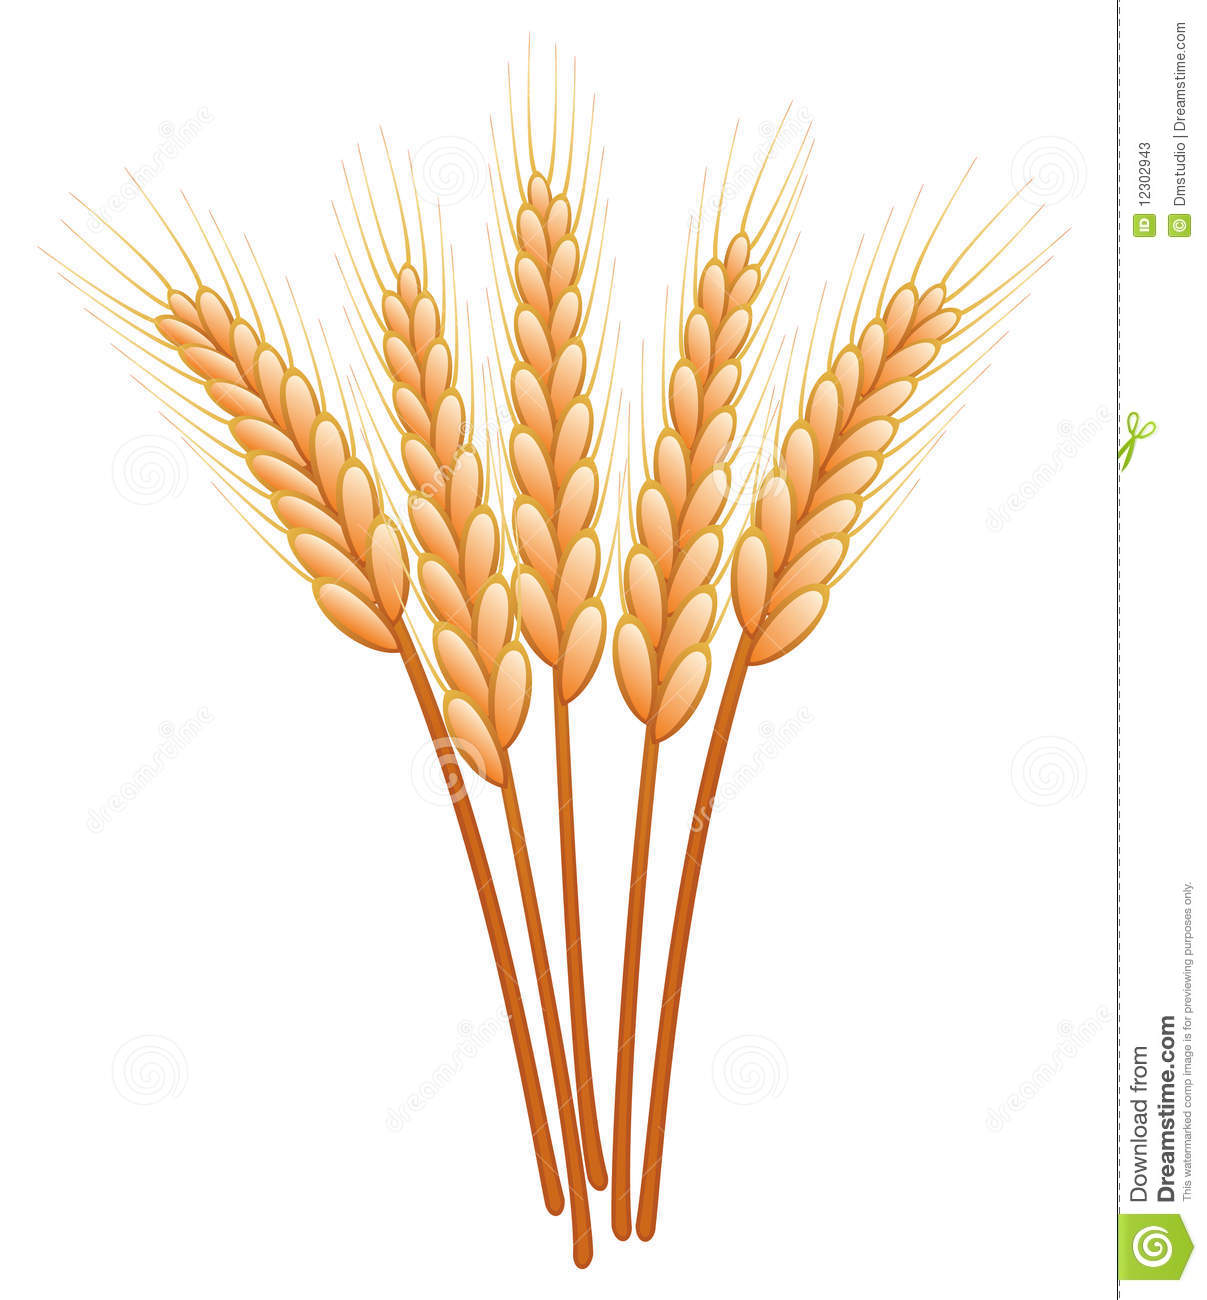 Clipart wheat stalk.